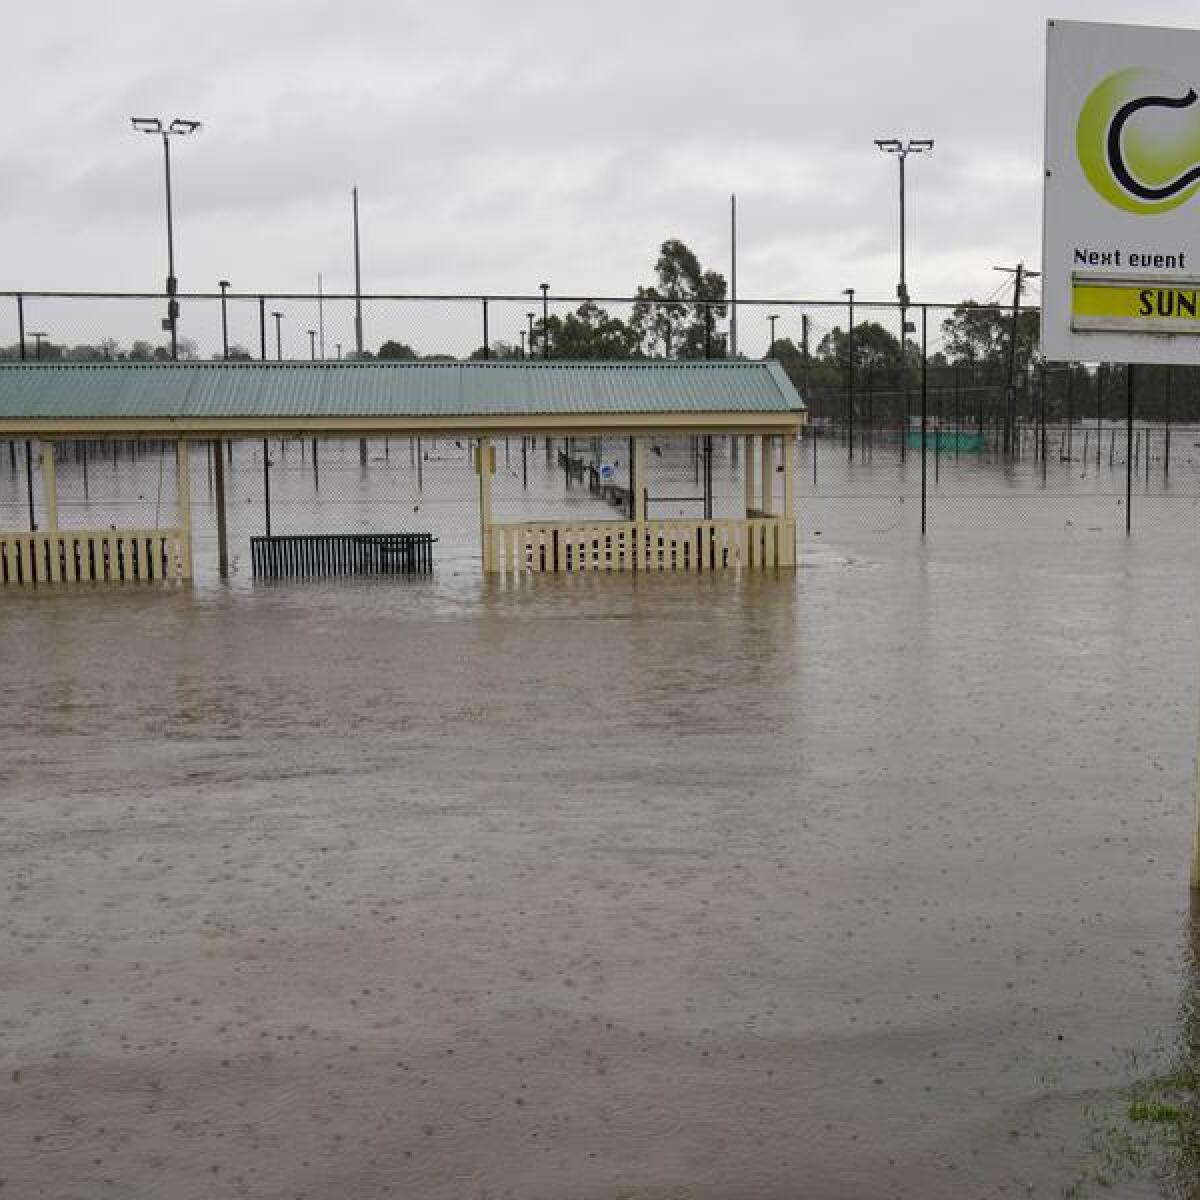 Flooded tennis courts in Camden, in southwest Sydney